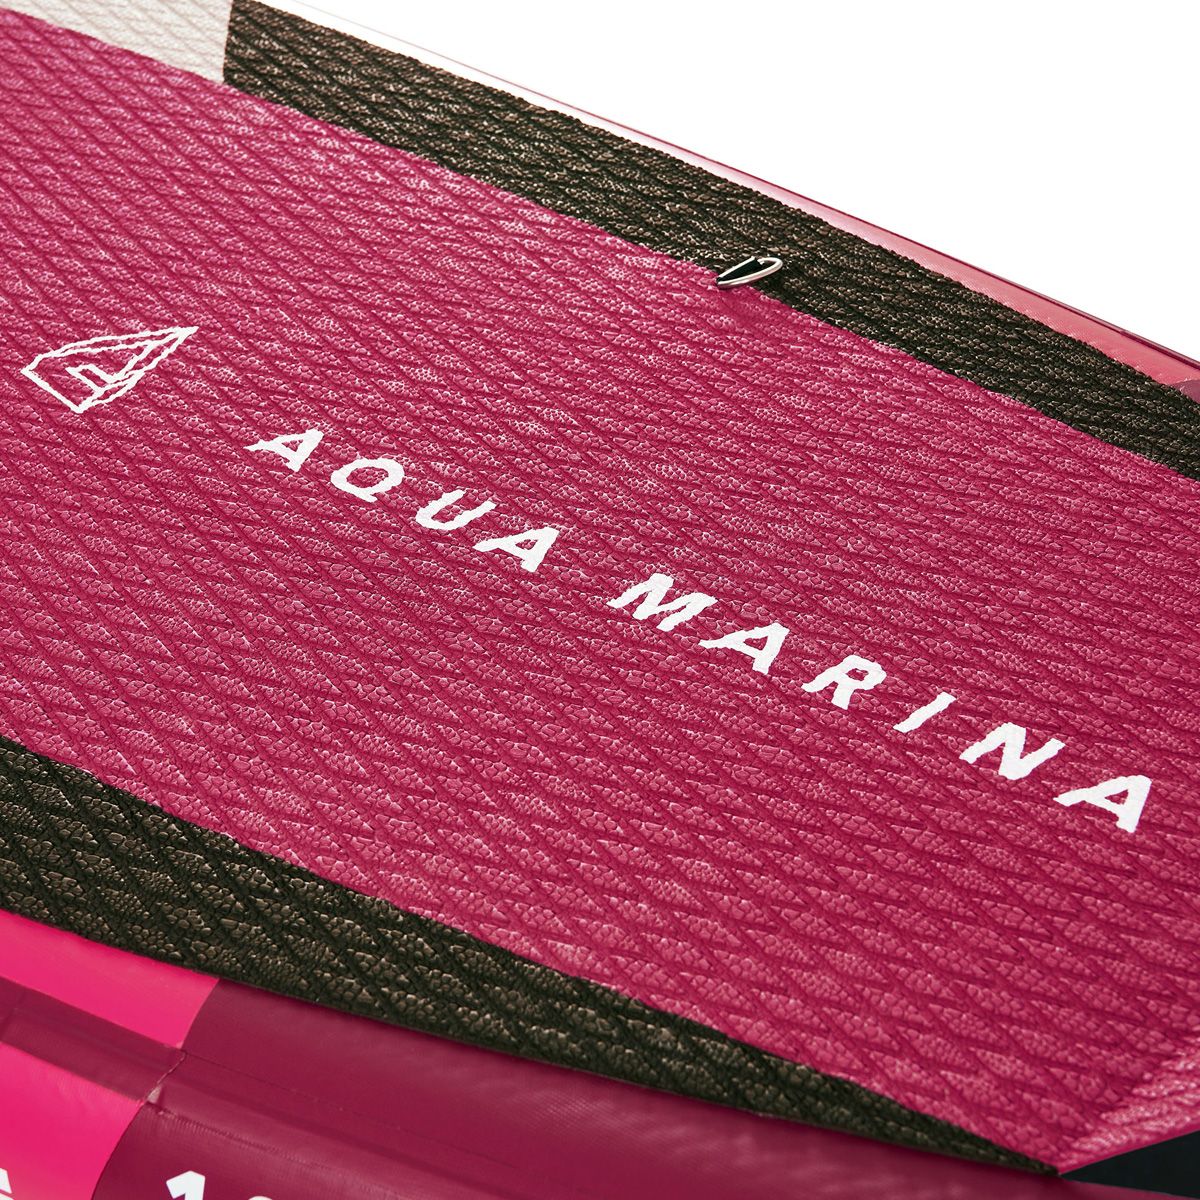 AQUA MARINA 'CORAL' LADIES 10'2" ADVANCED iSUP PACKAGE - EX DISPLAY